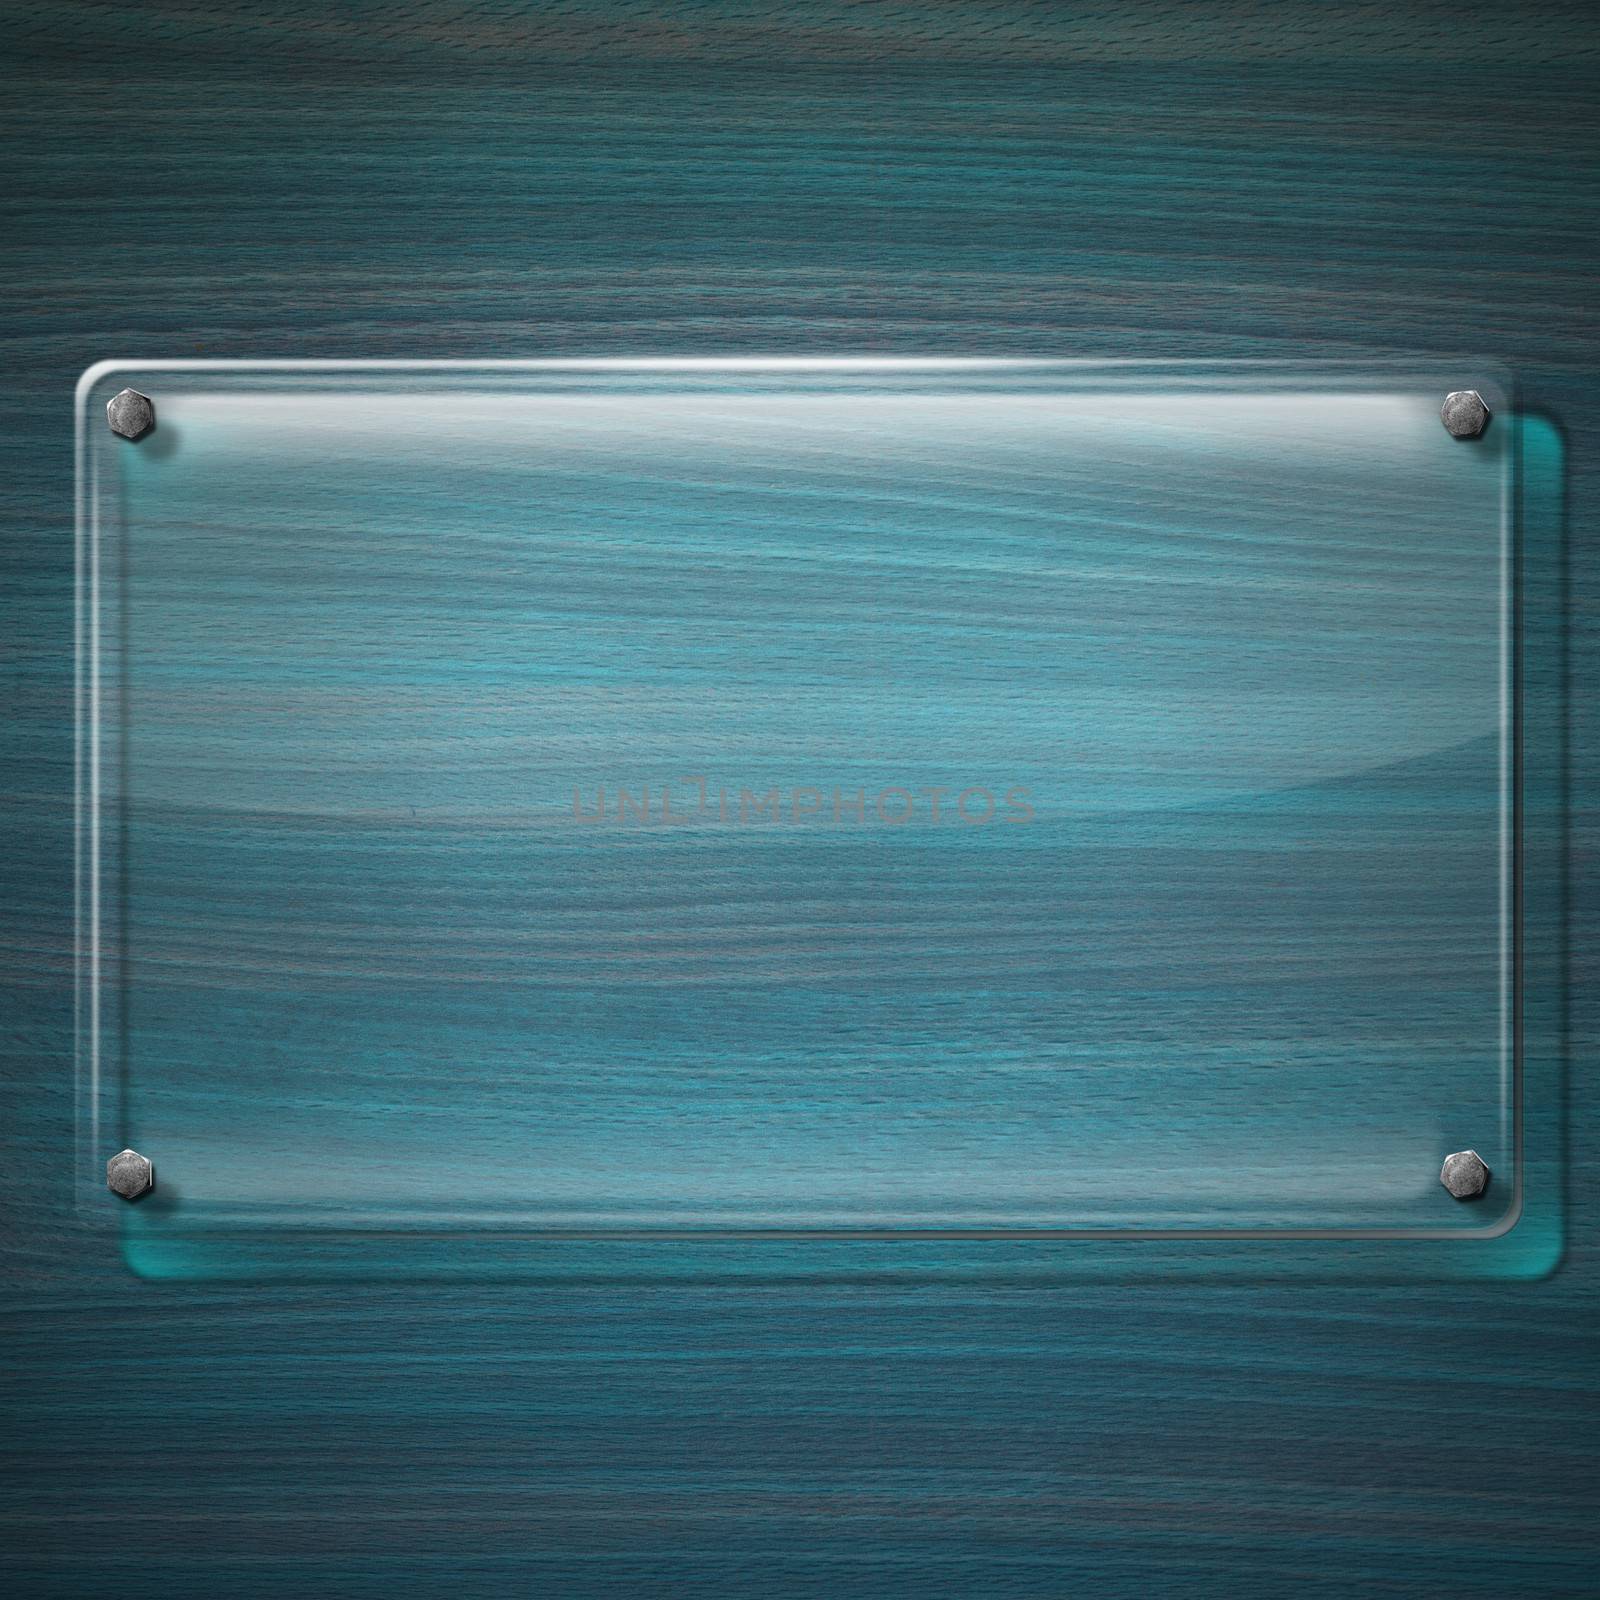 Glass or plexiglas framework on wooden turquoise background

